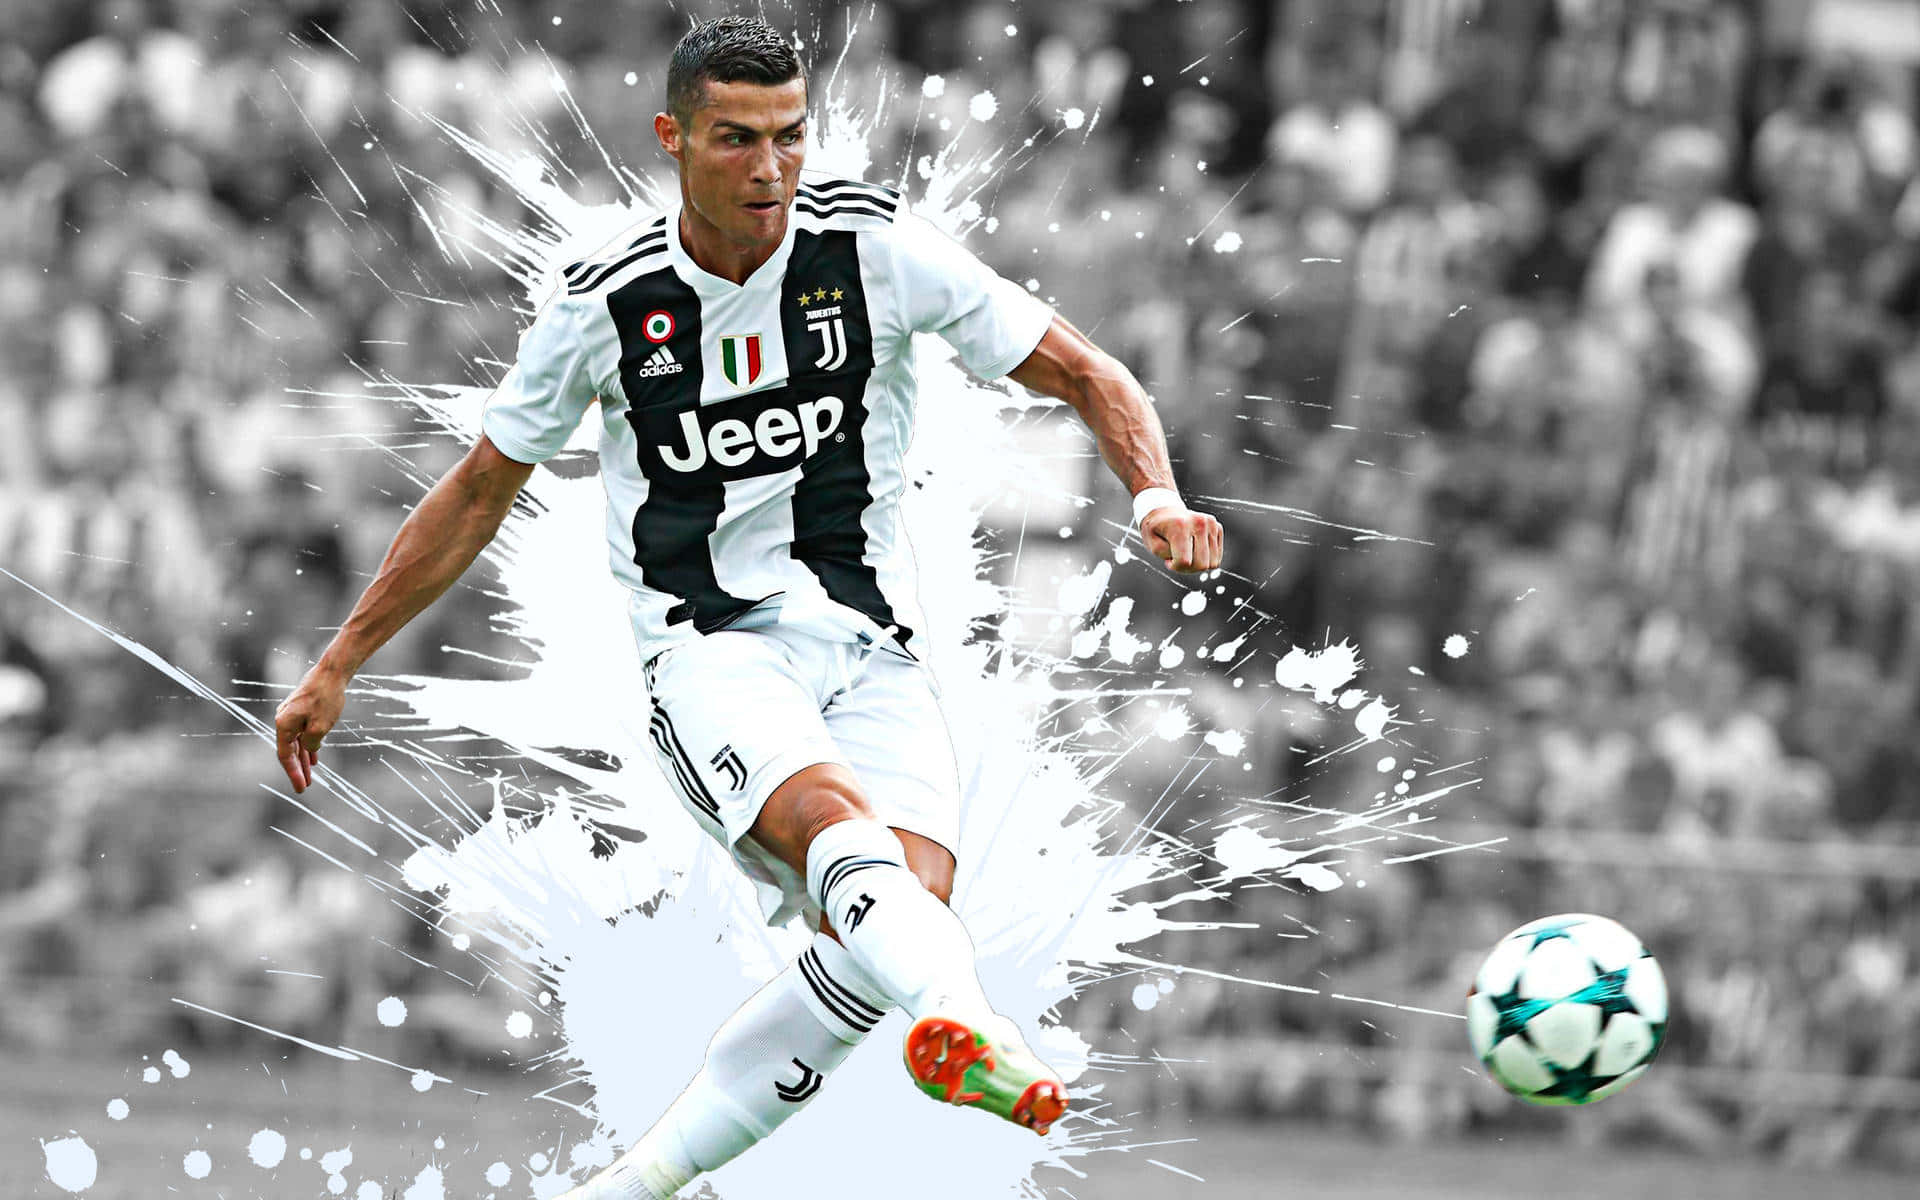 Ronaldo, brilliant soccer player